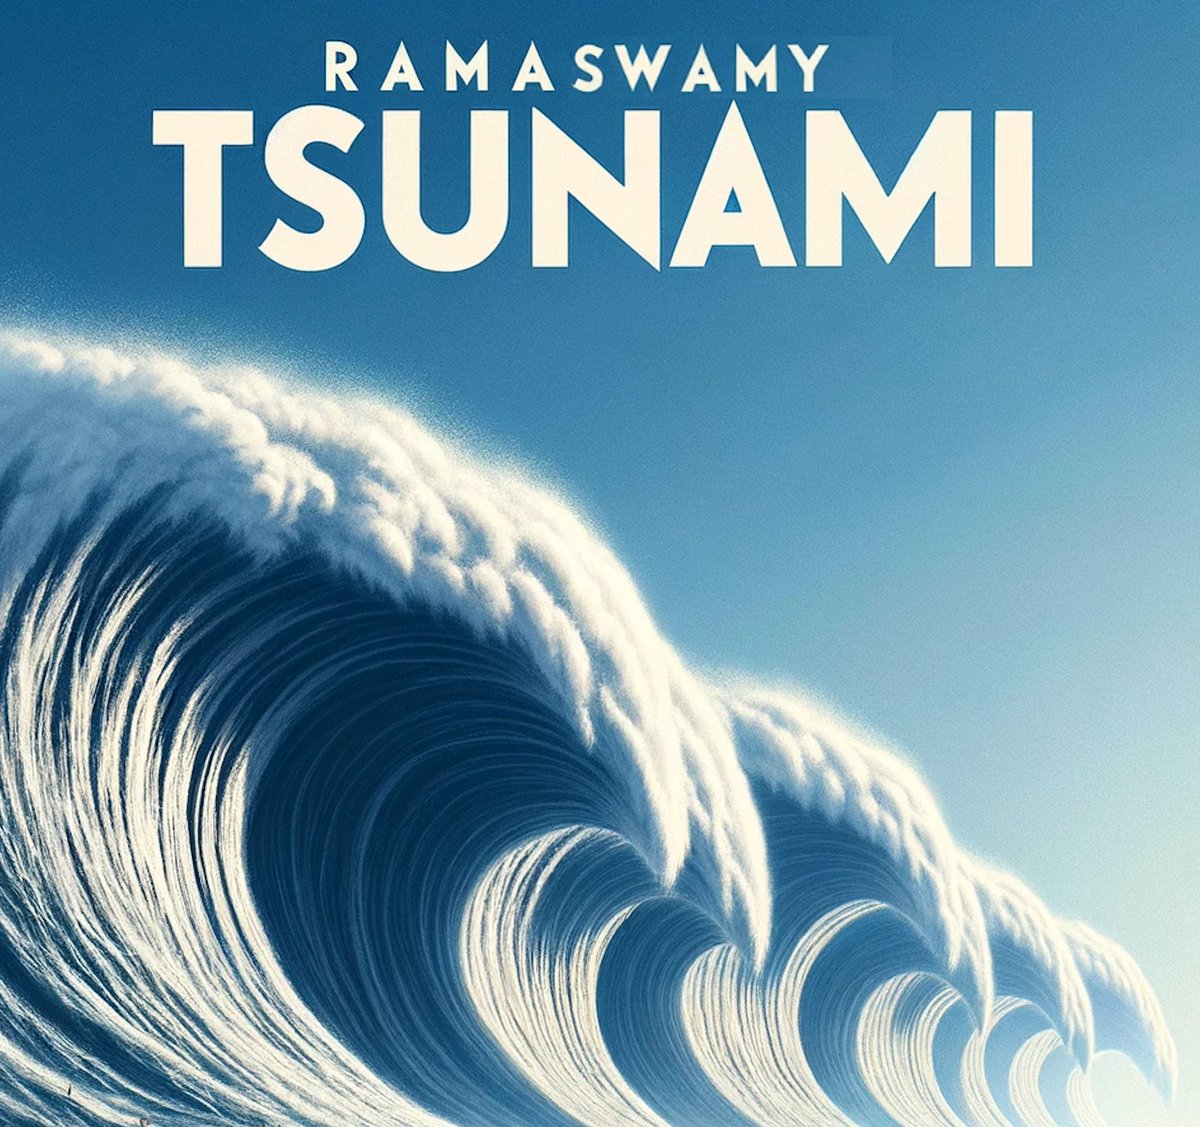 Trump is on board. The #RamaswamyTsunami is still happening!!